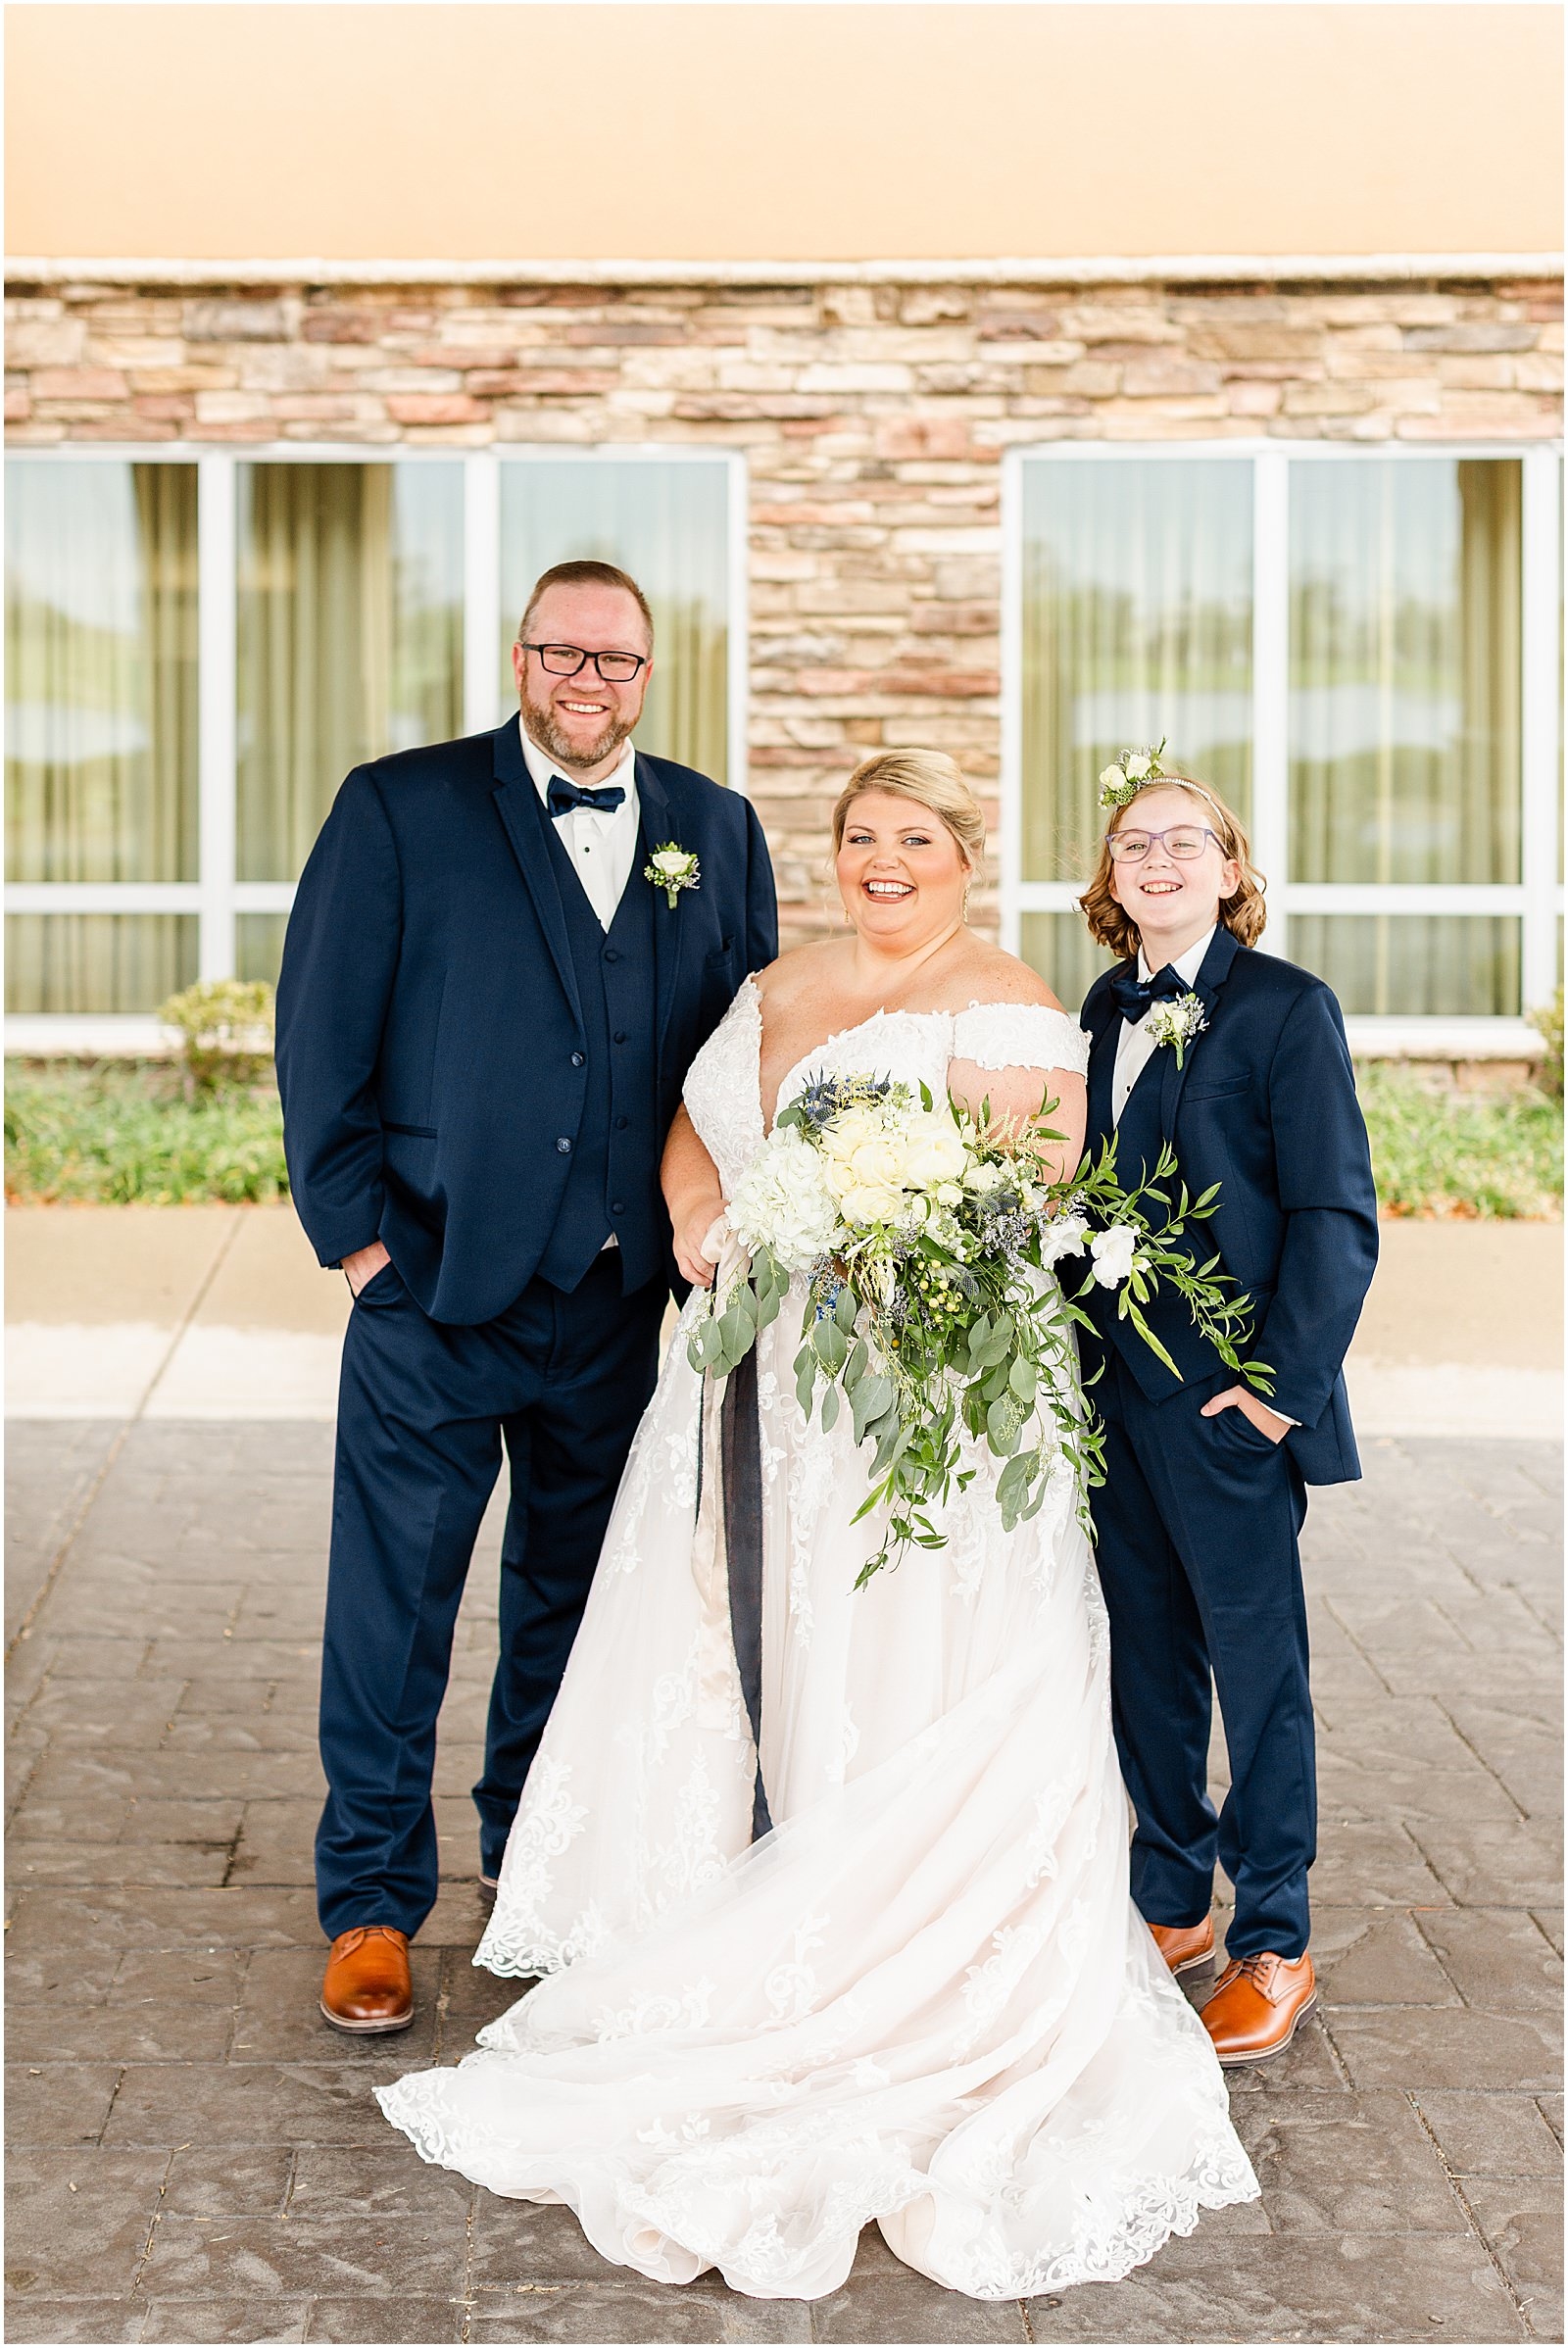 Brittany and Neil's Wedding at Neu Chapel Bret and Brandie | Evansville Photographers | @bretandbrandie-0071.jpg